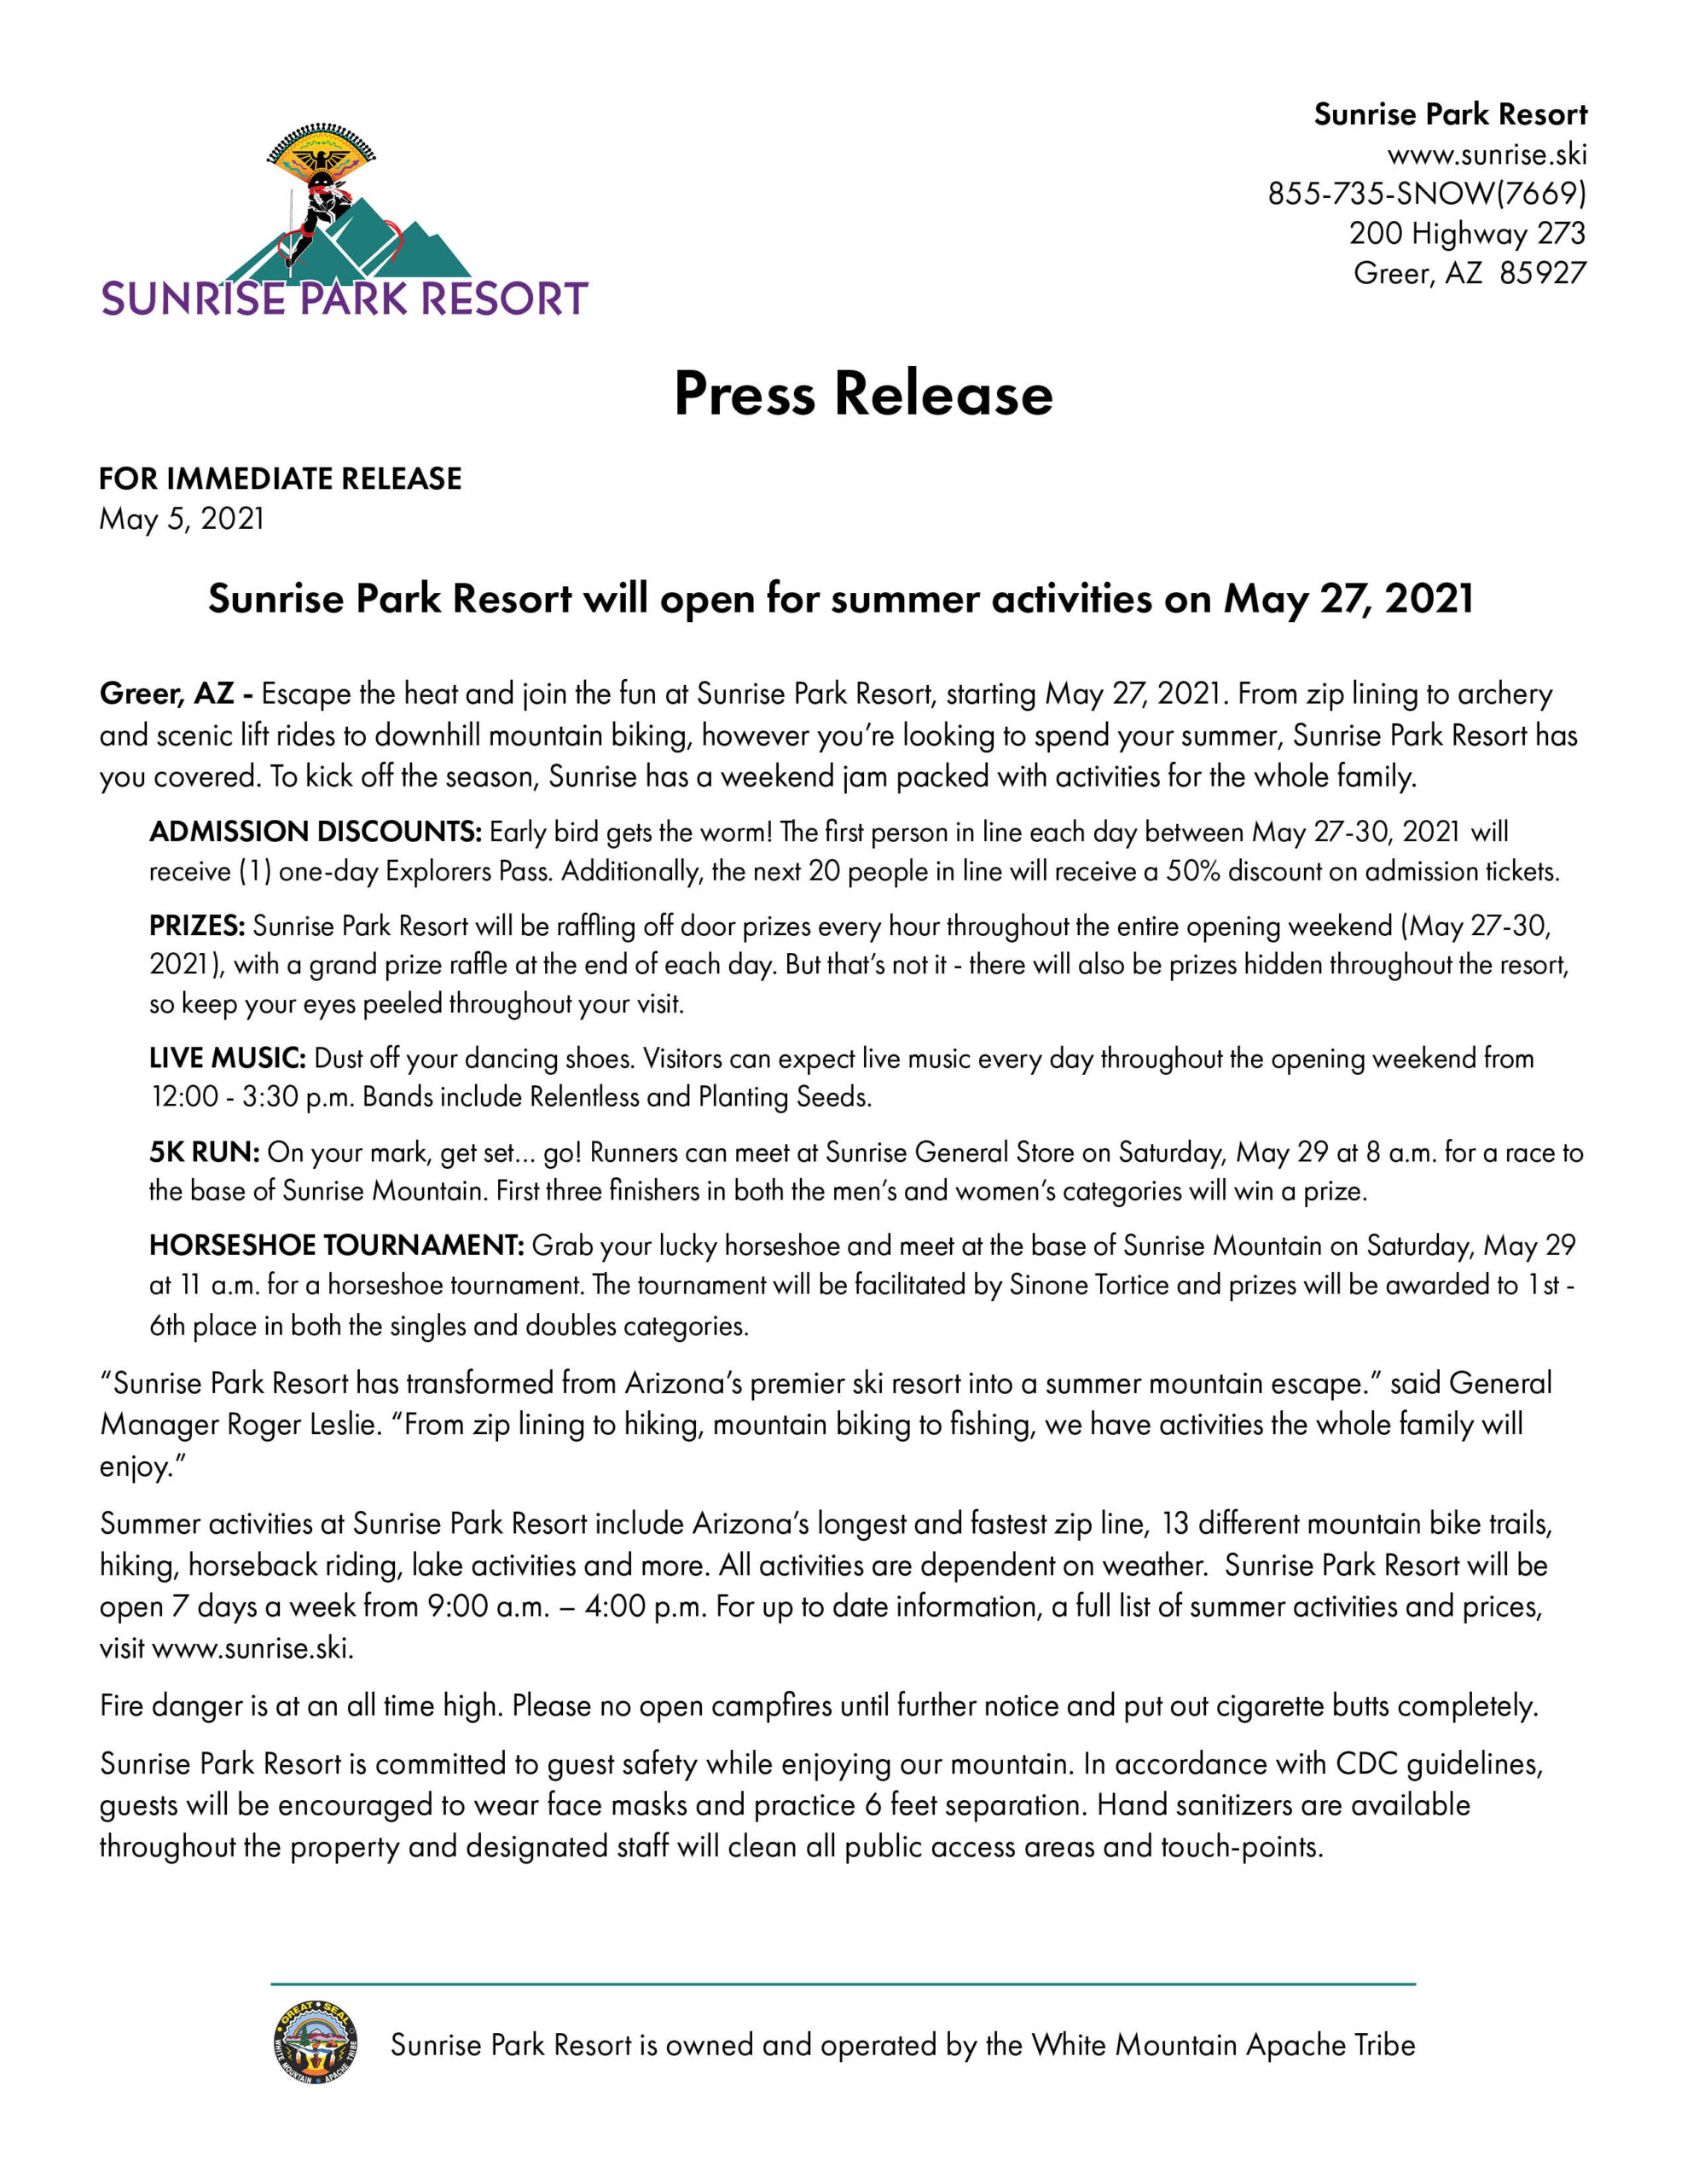 Summer 2021 Opening Press Release